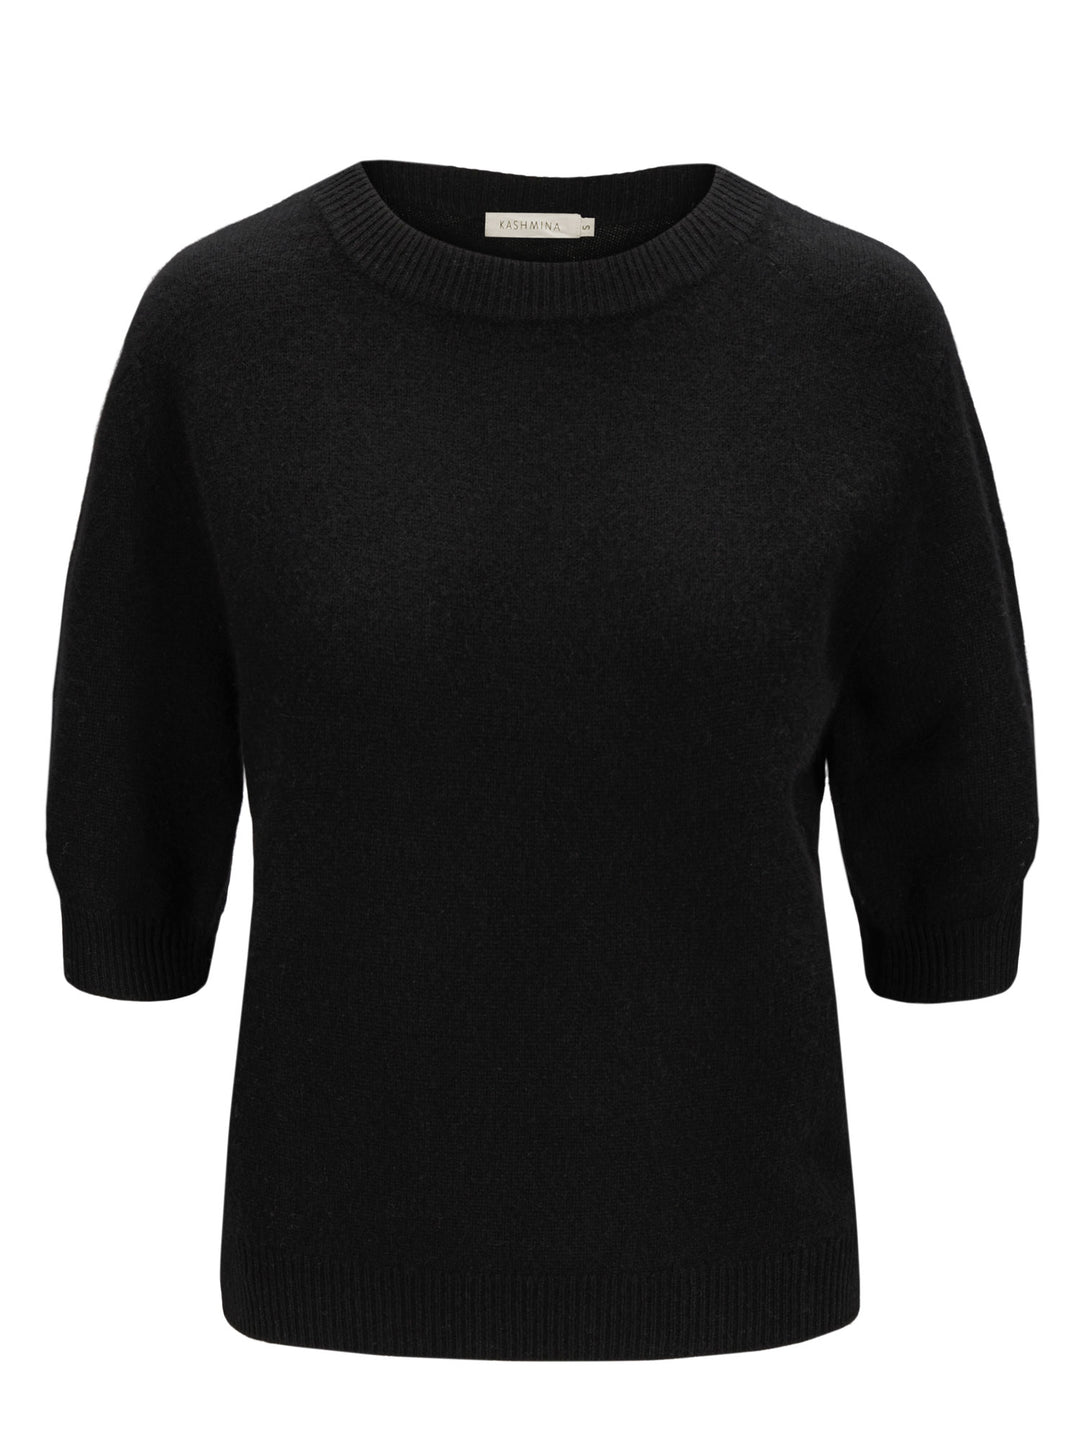 Short sleeved cashmere sweater "Aase" in 100% pure cashmere. Scandinavian design by Kashmina. Color: Black.